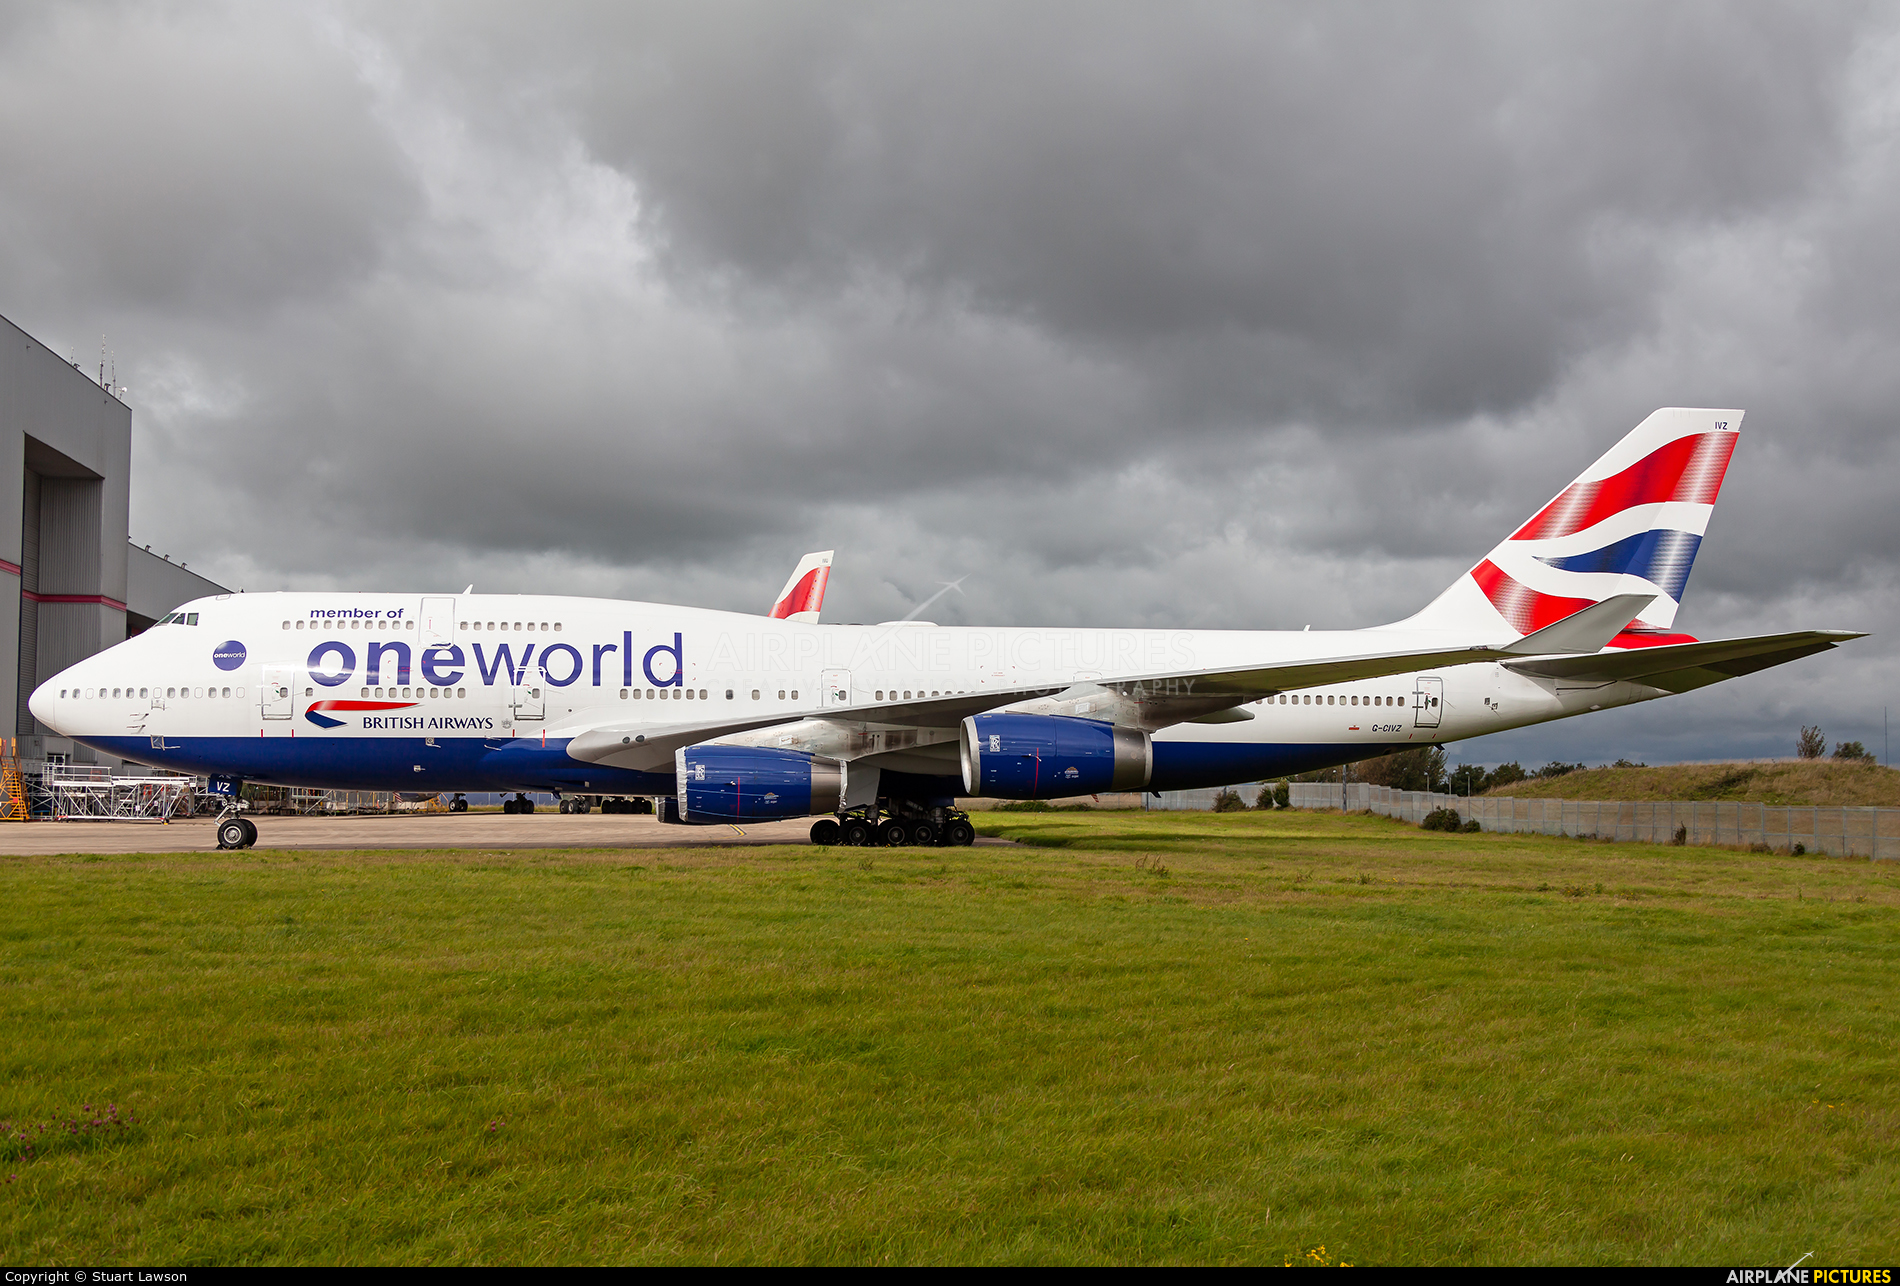 G-CIVZ - British Airways Boeing 747-400 at Cardiff | Photo ID 1339312 ...